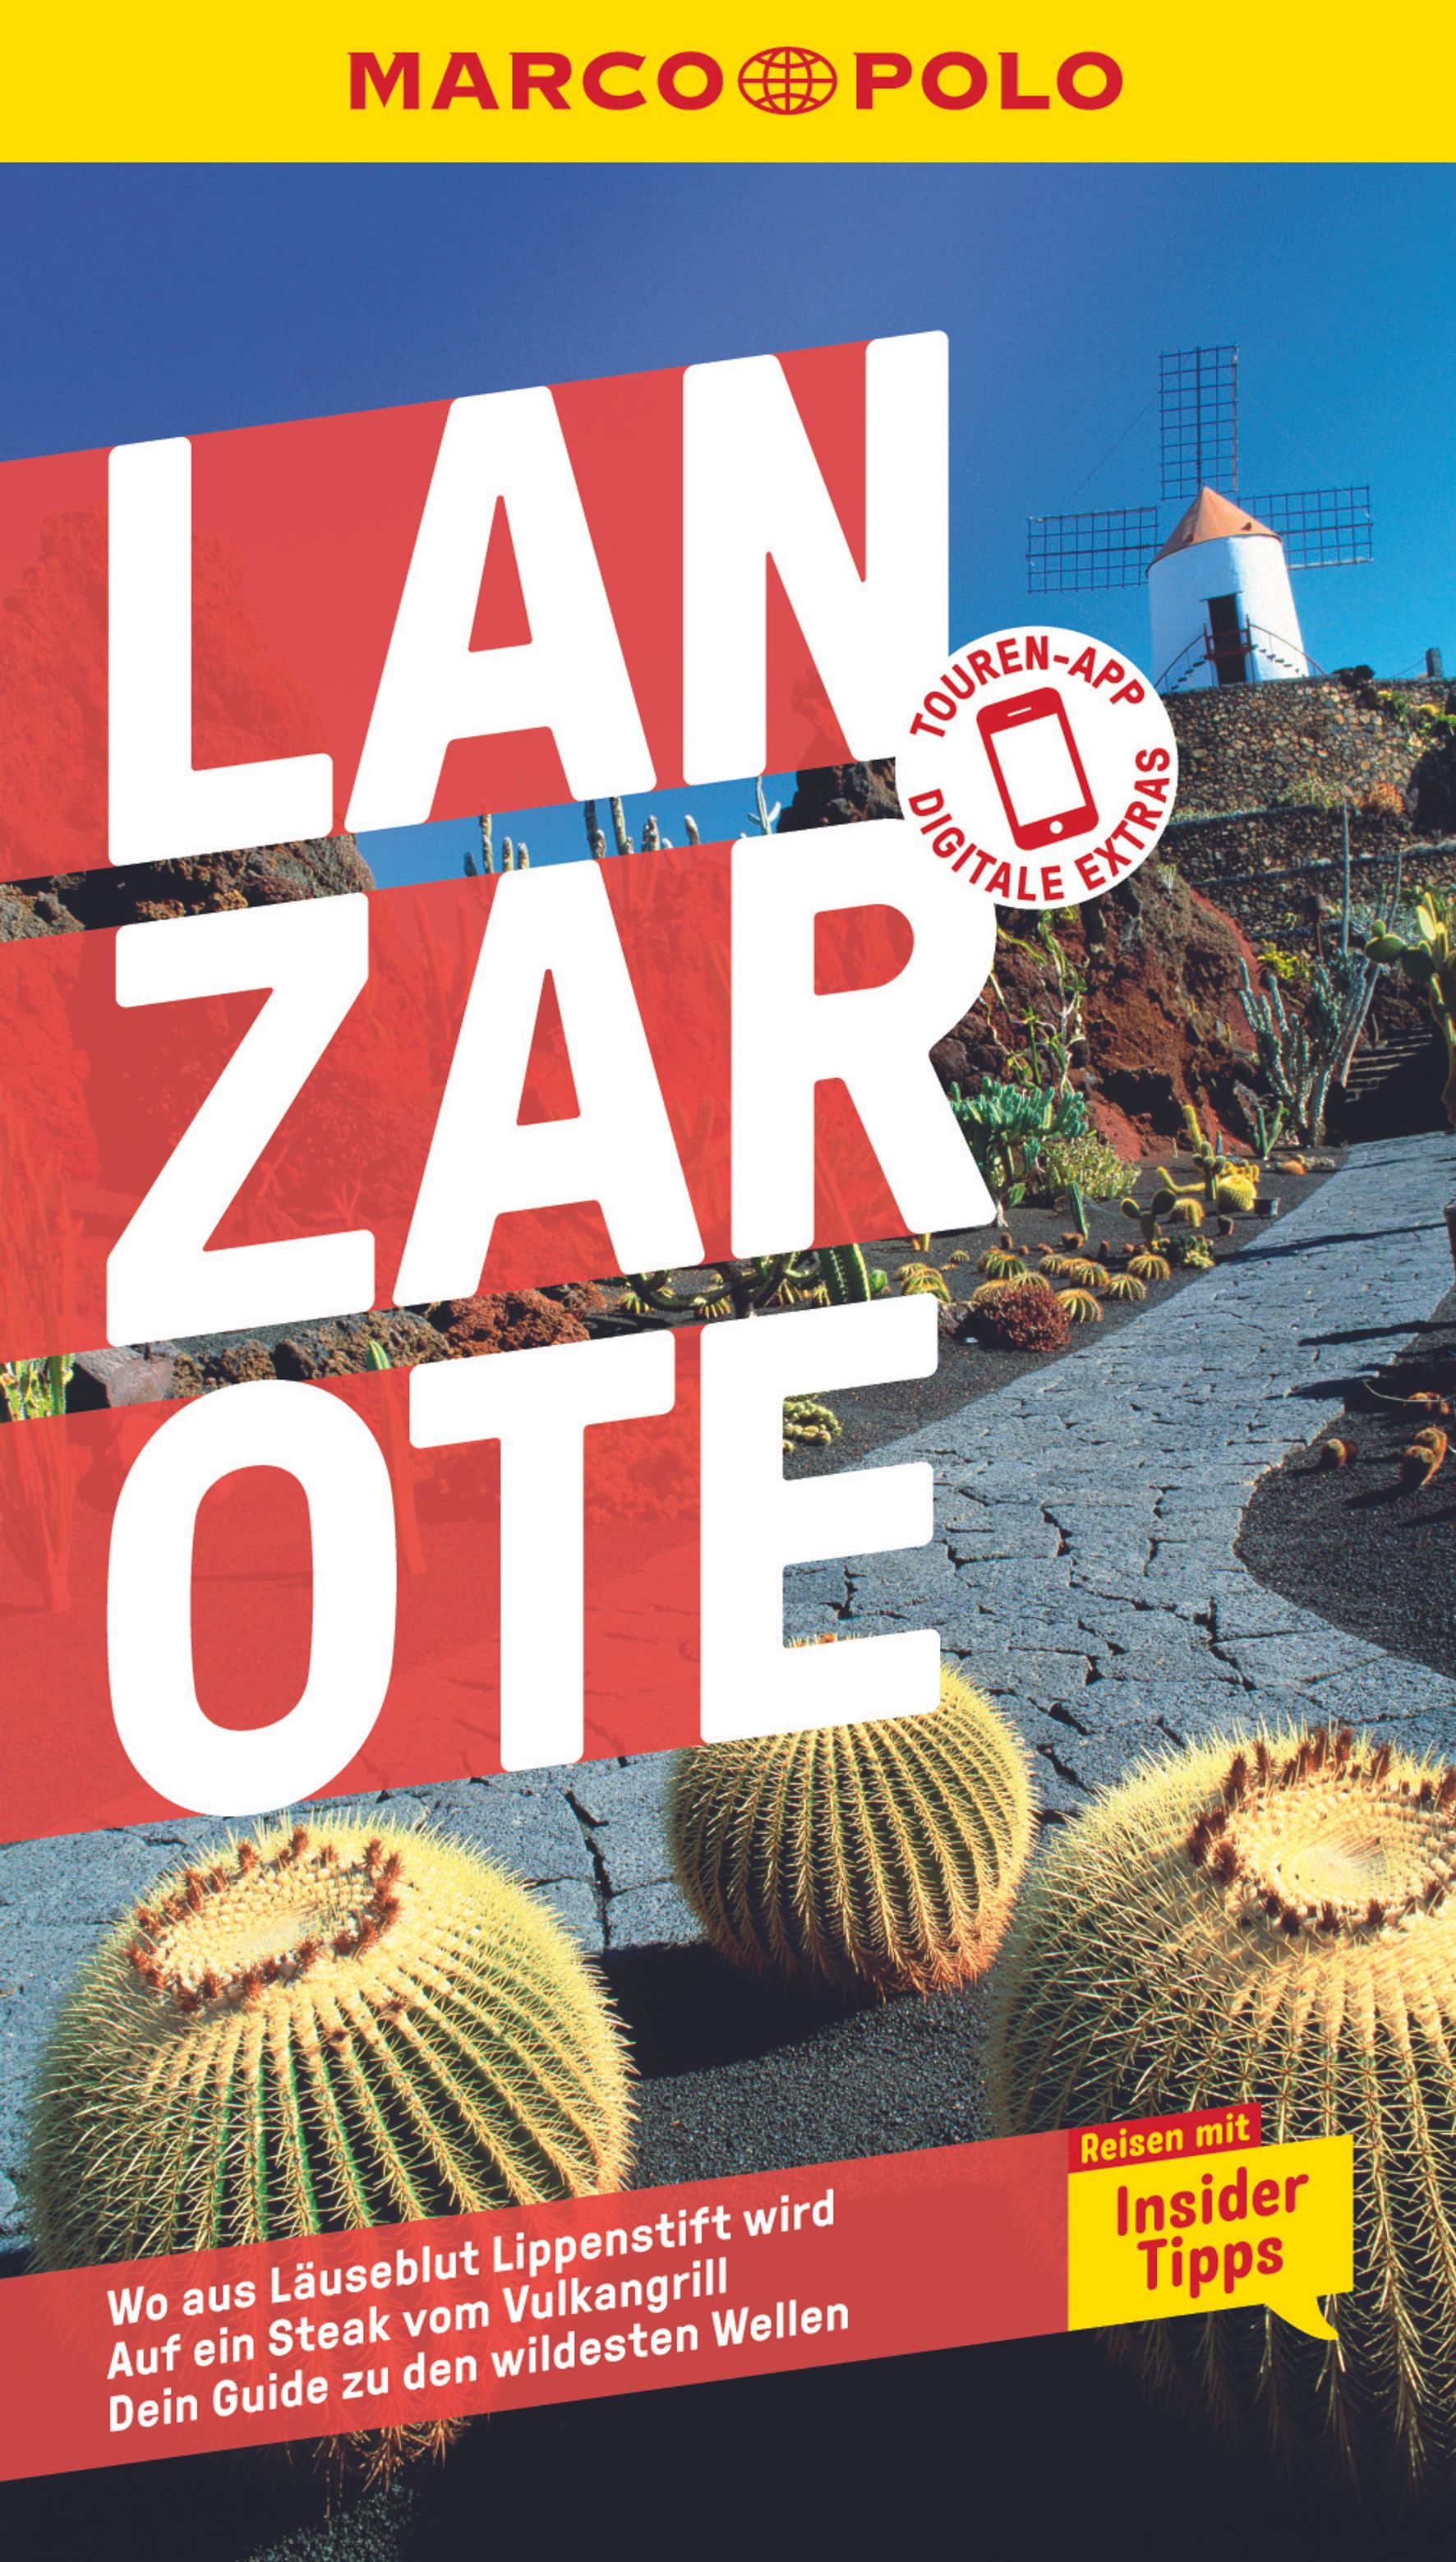 MAIRDUMONT Lanzarote (eBook)